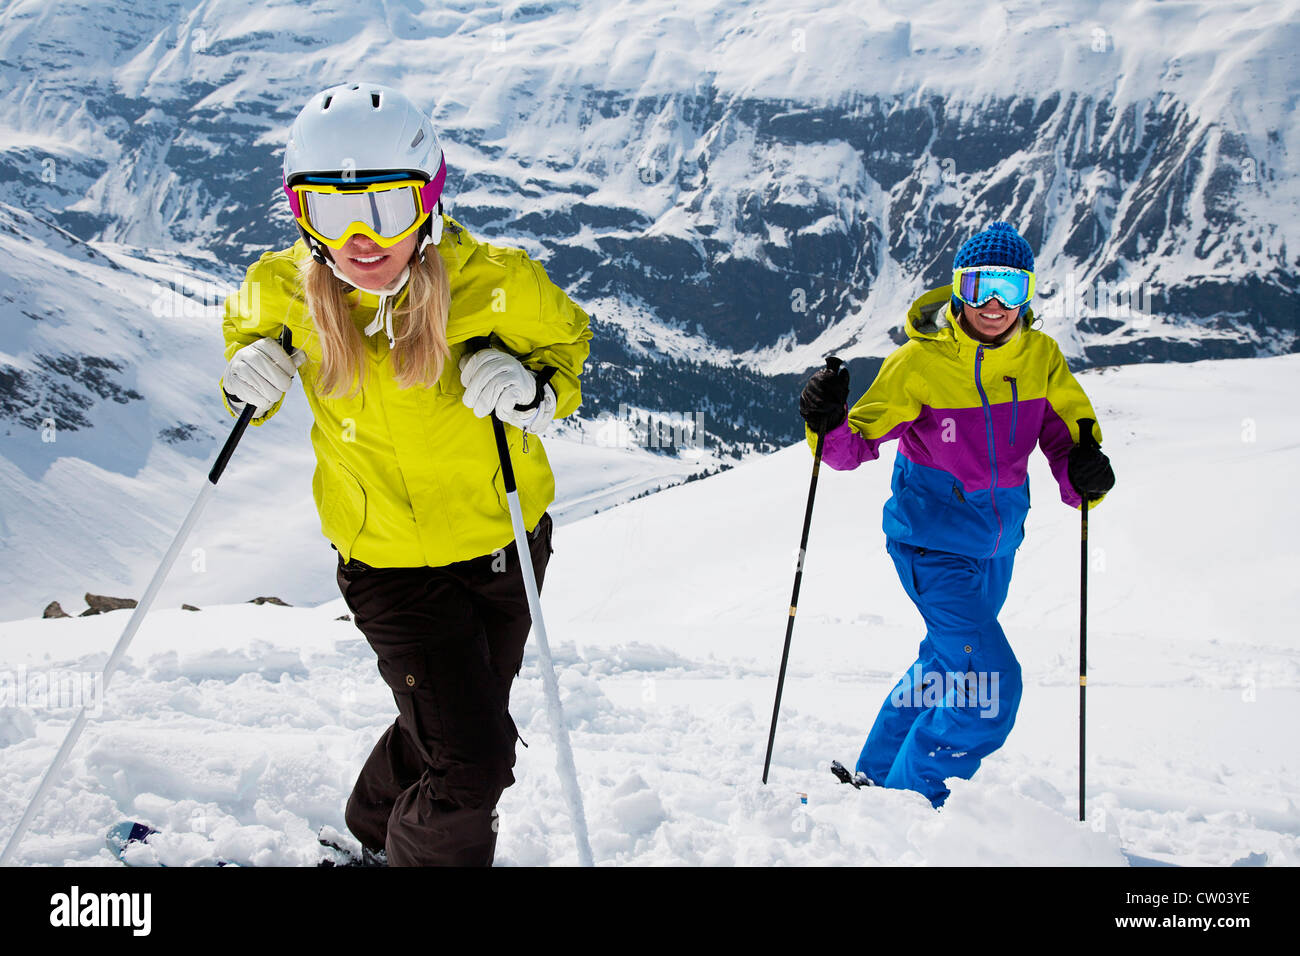 Les skieurs debout on snowy slope Banque D'Images